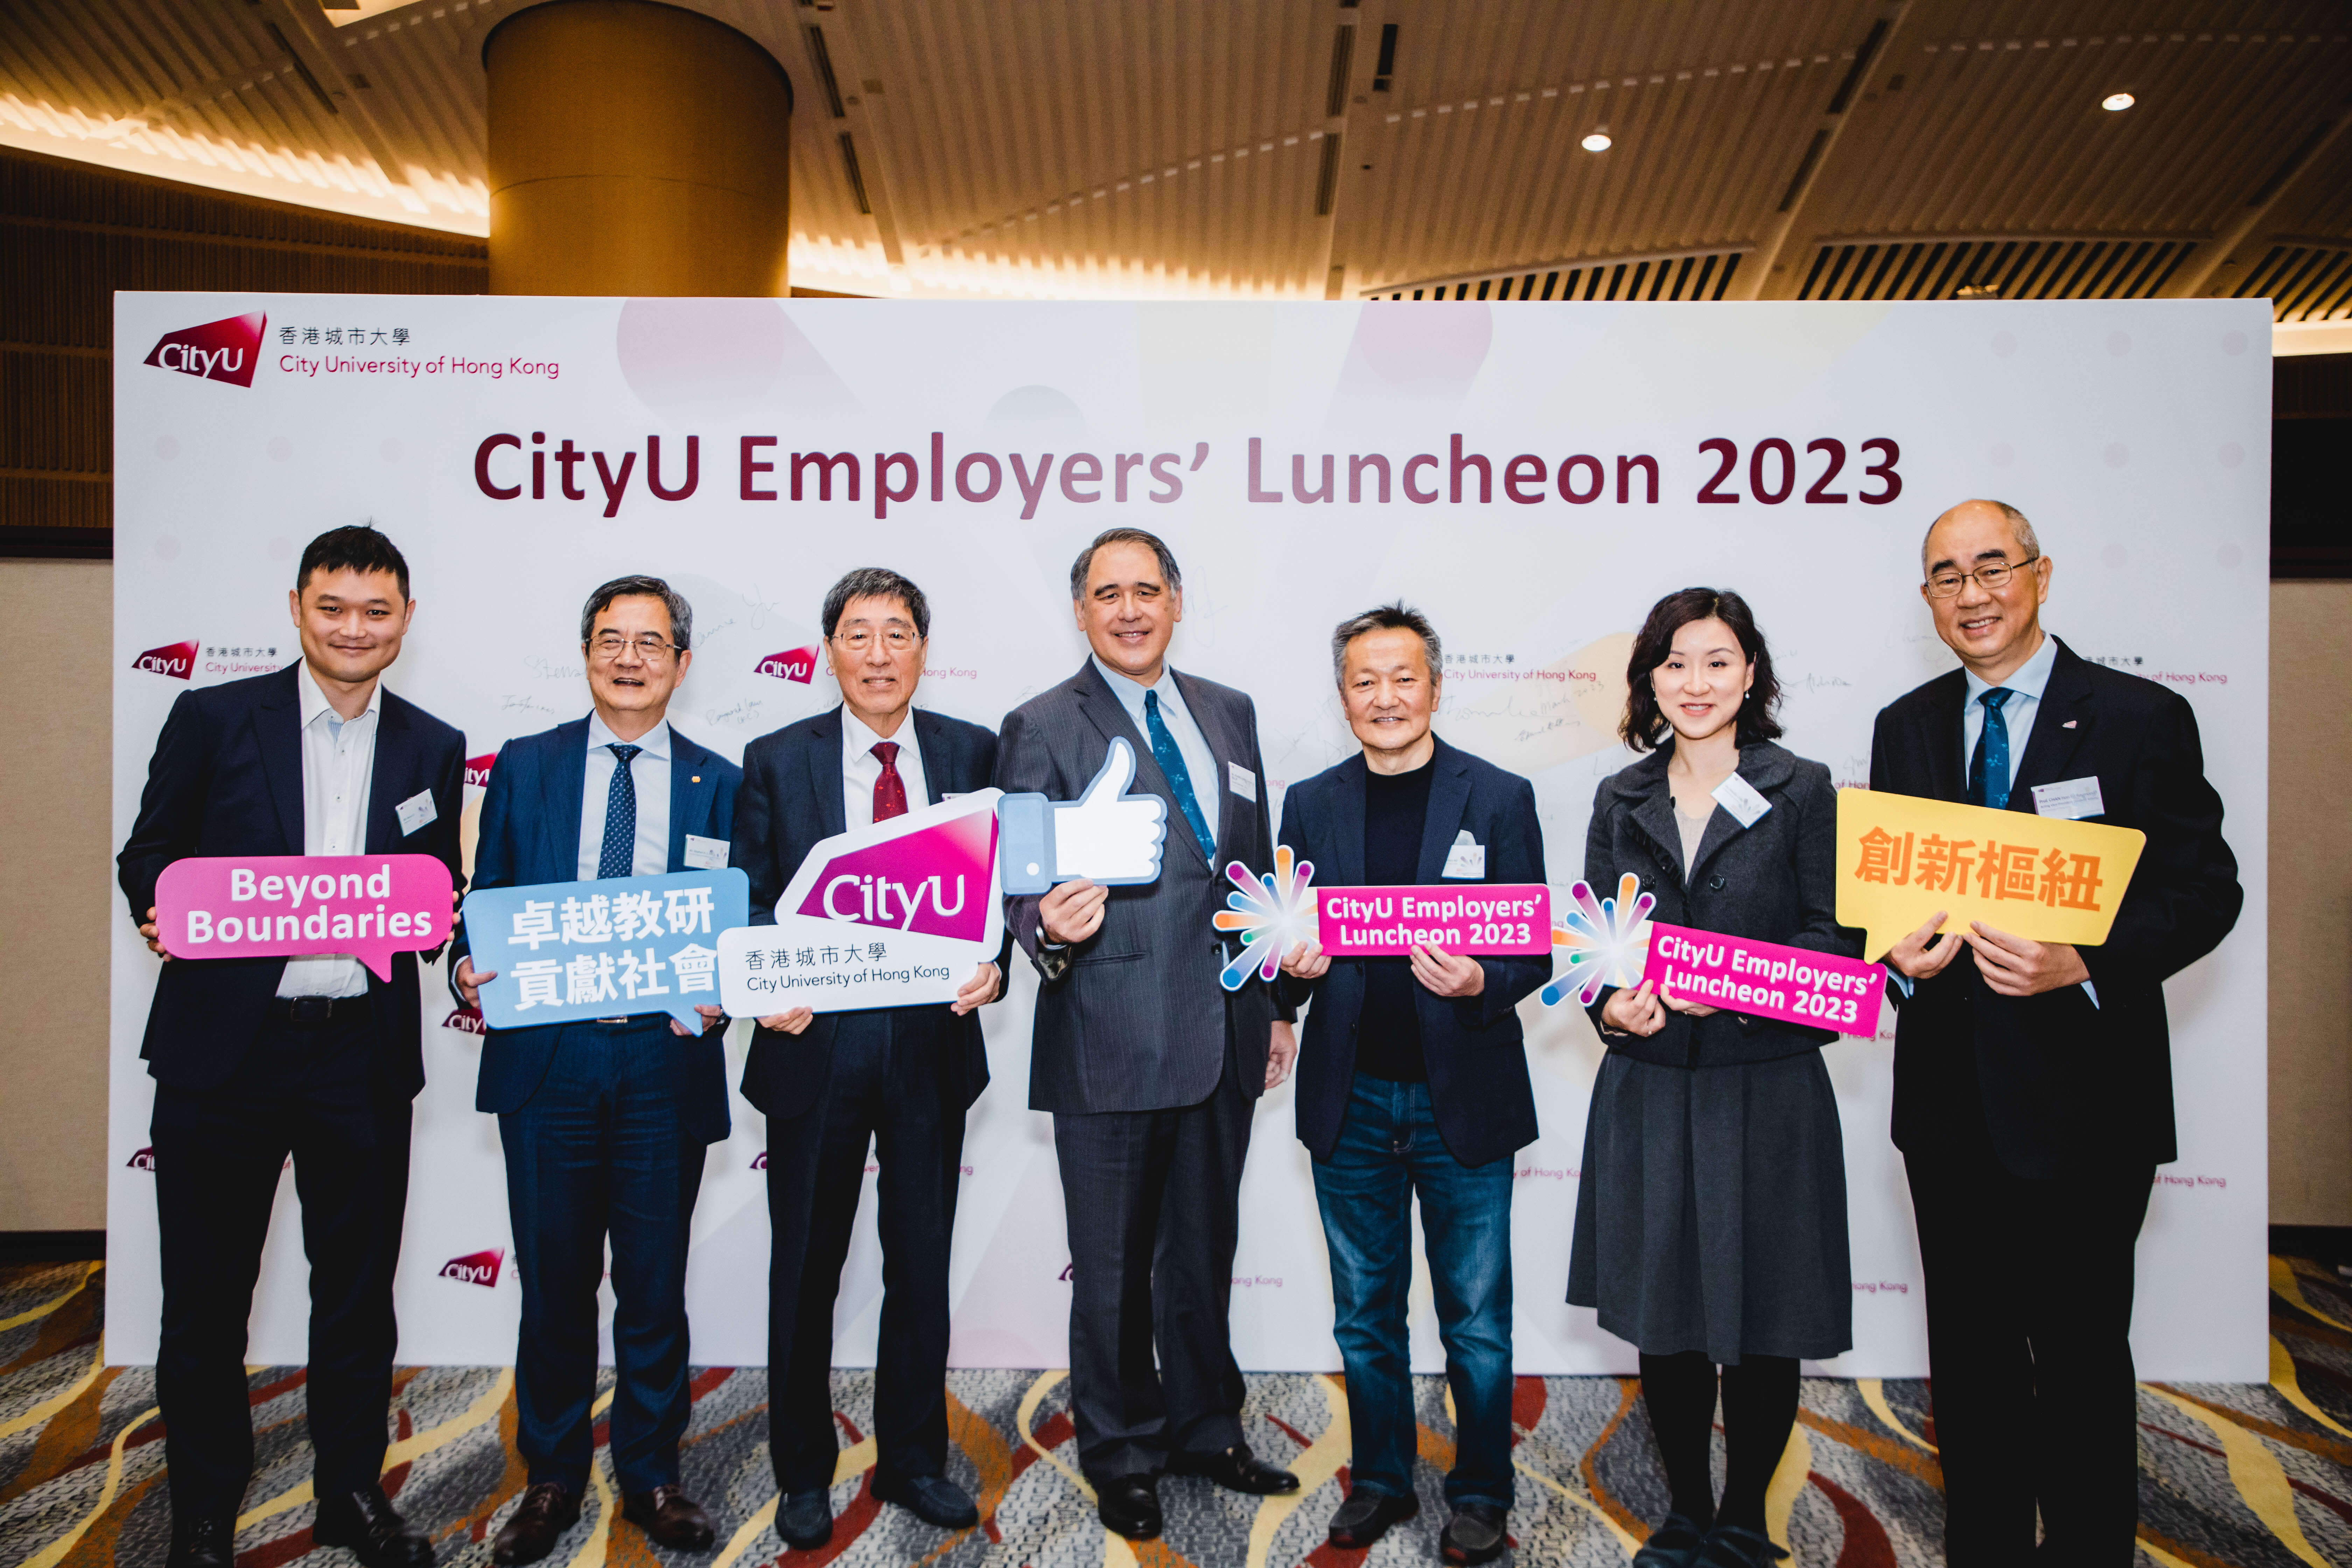 CityU Employer’s Luncheon 2023